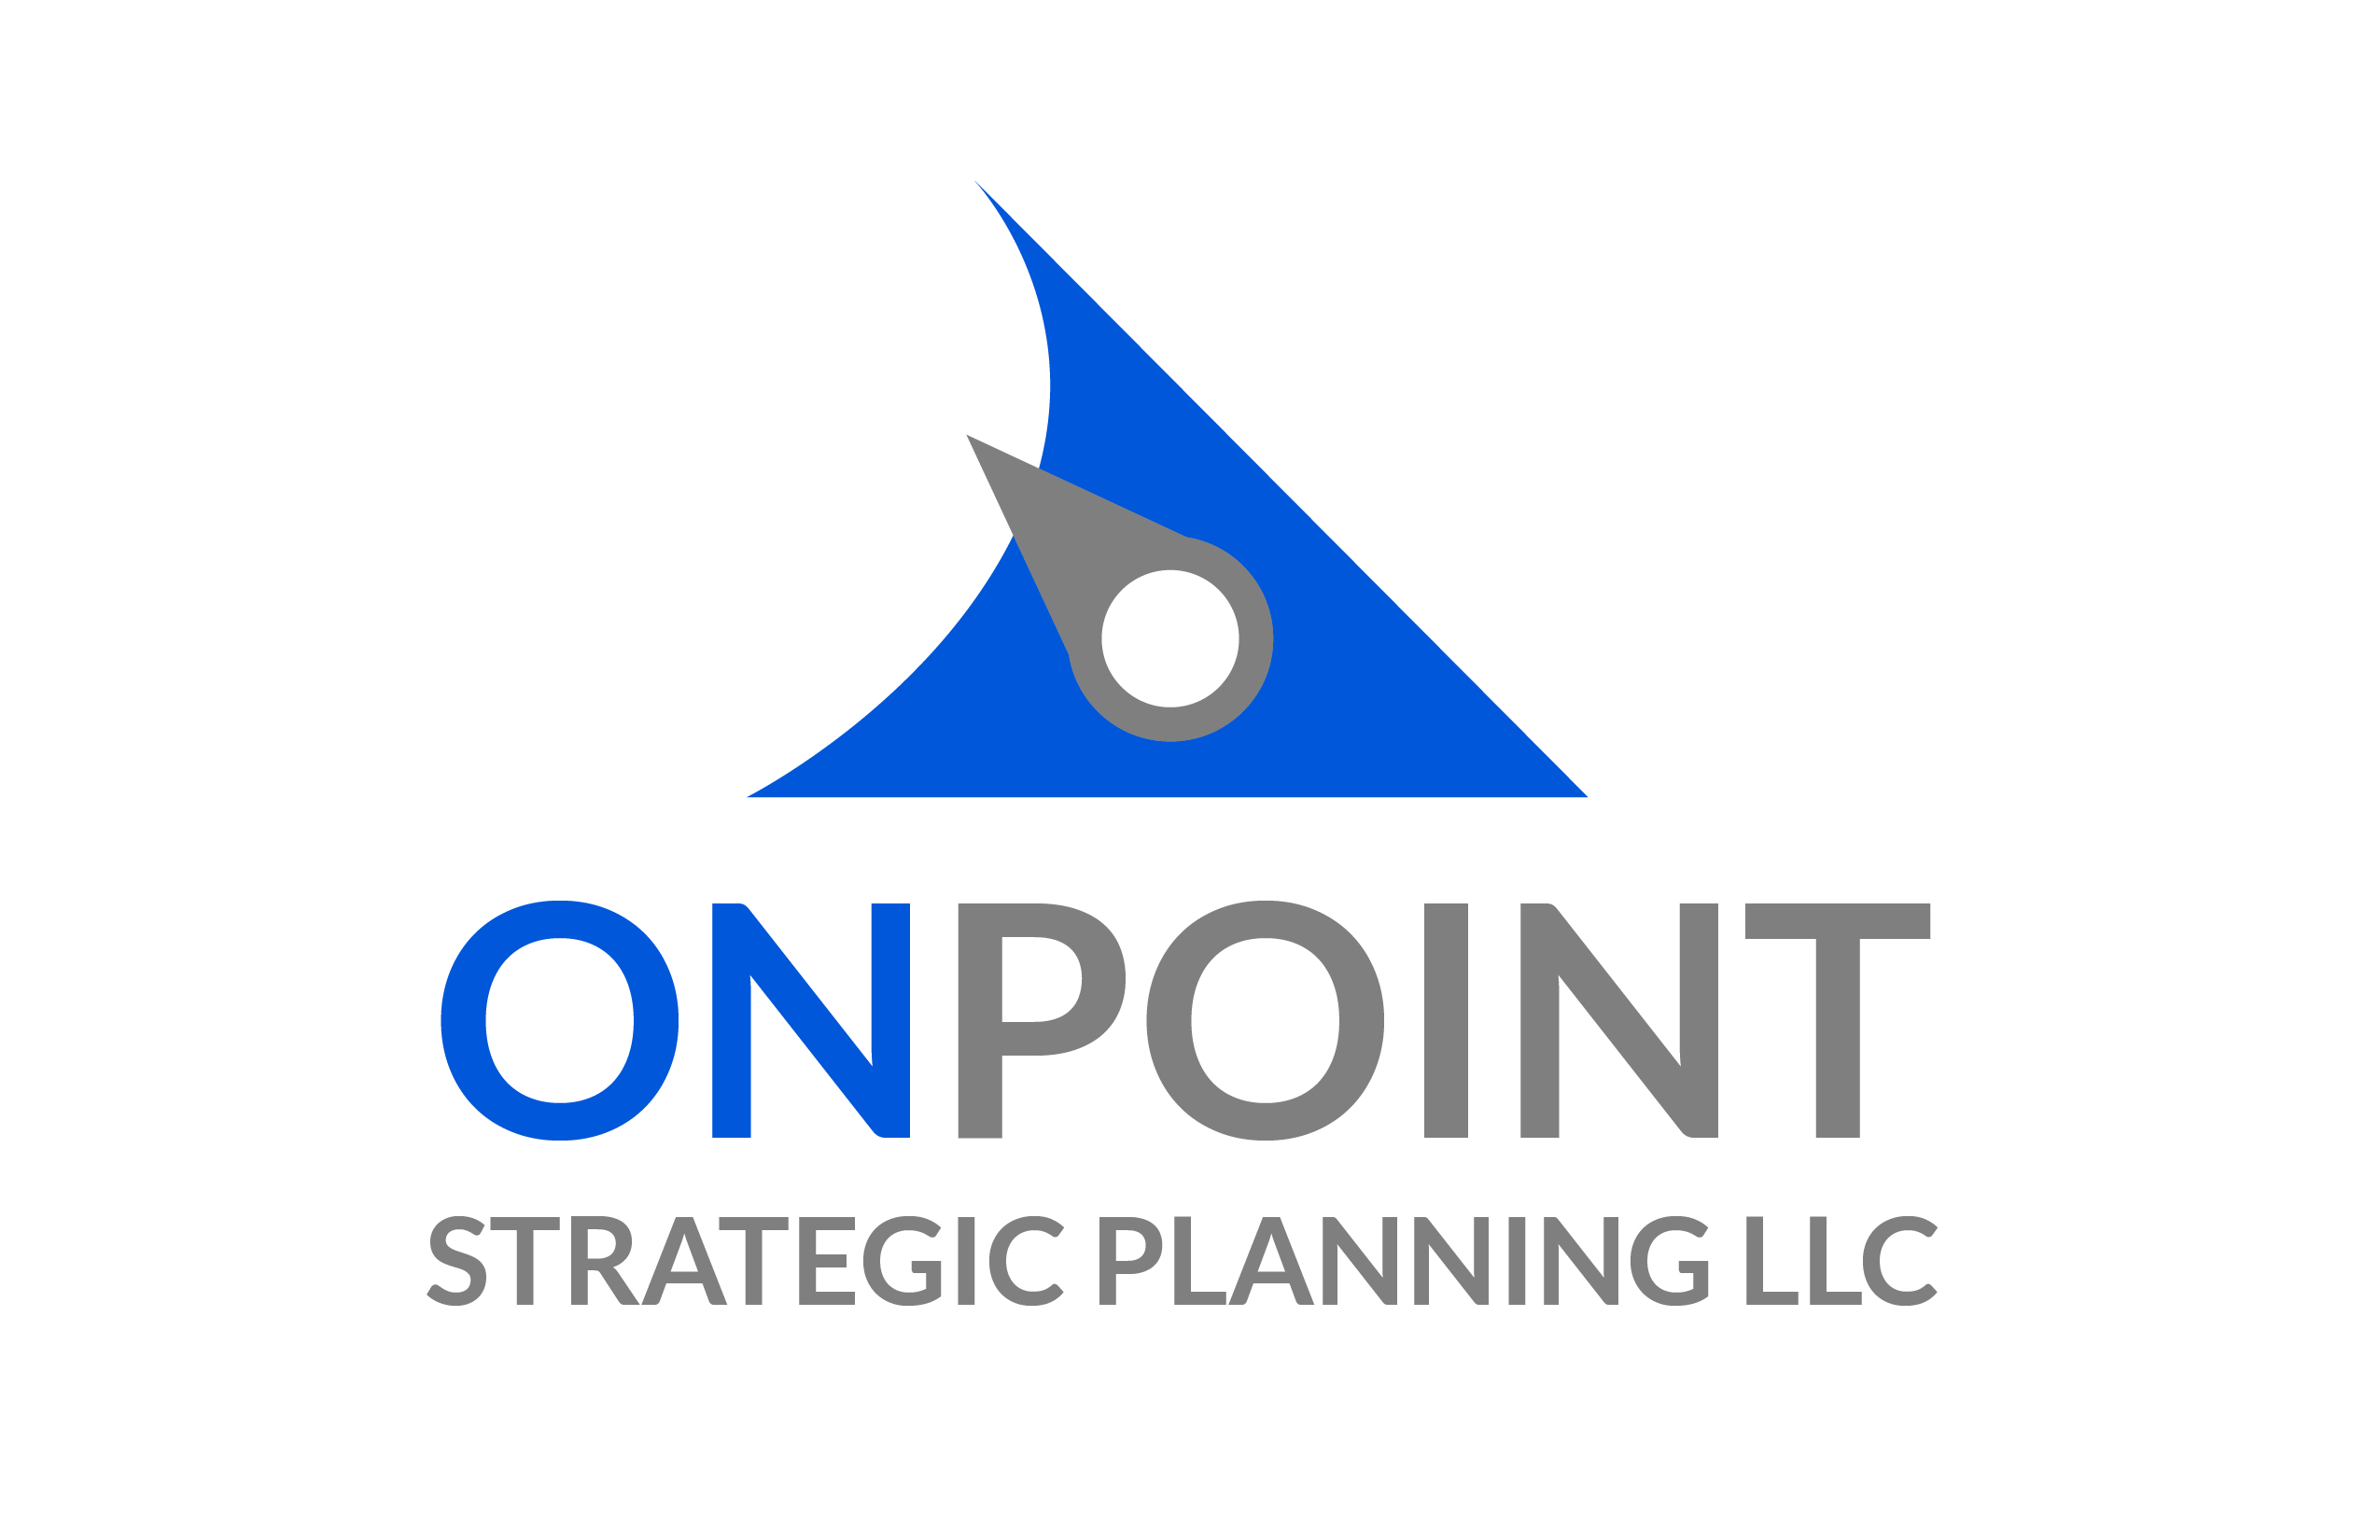 On Point Strategic Planning LLC